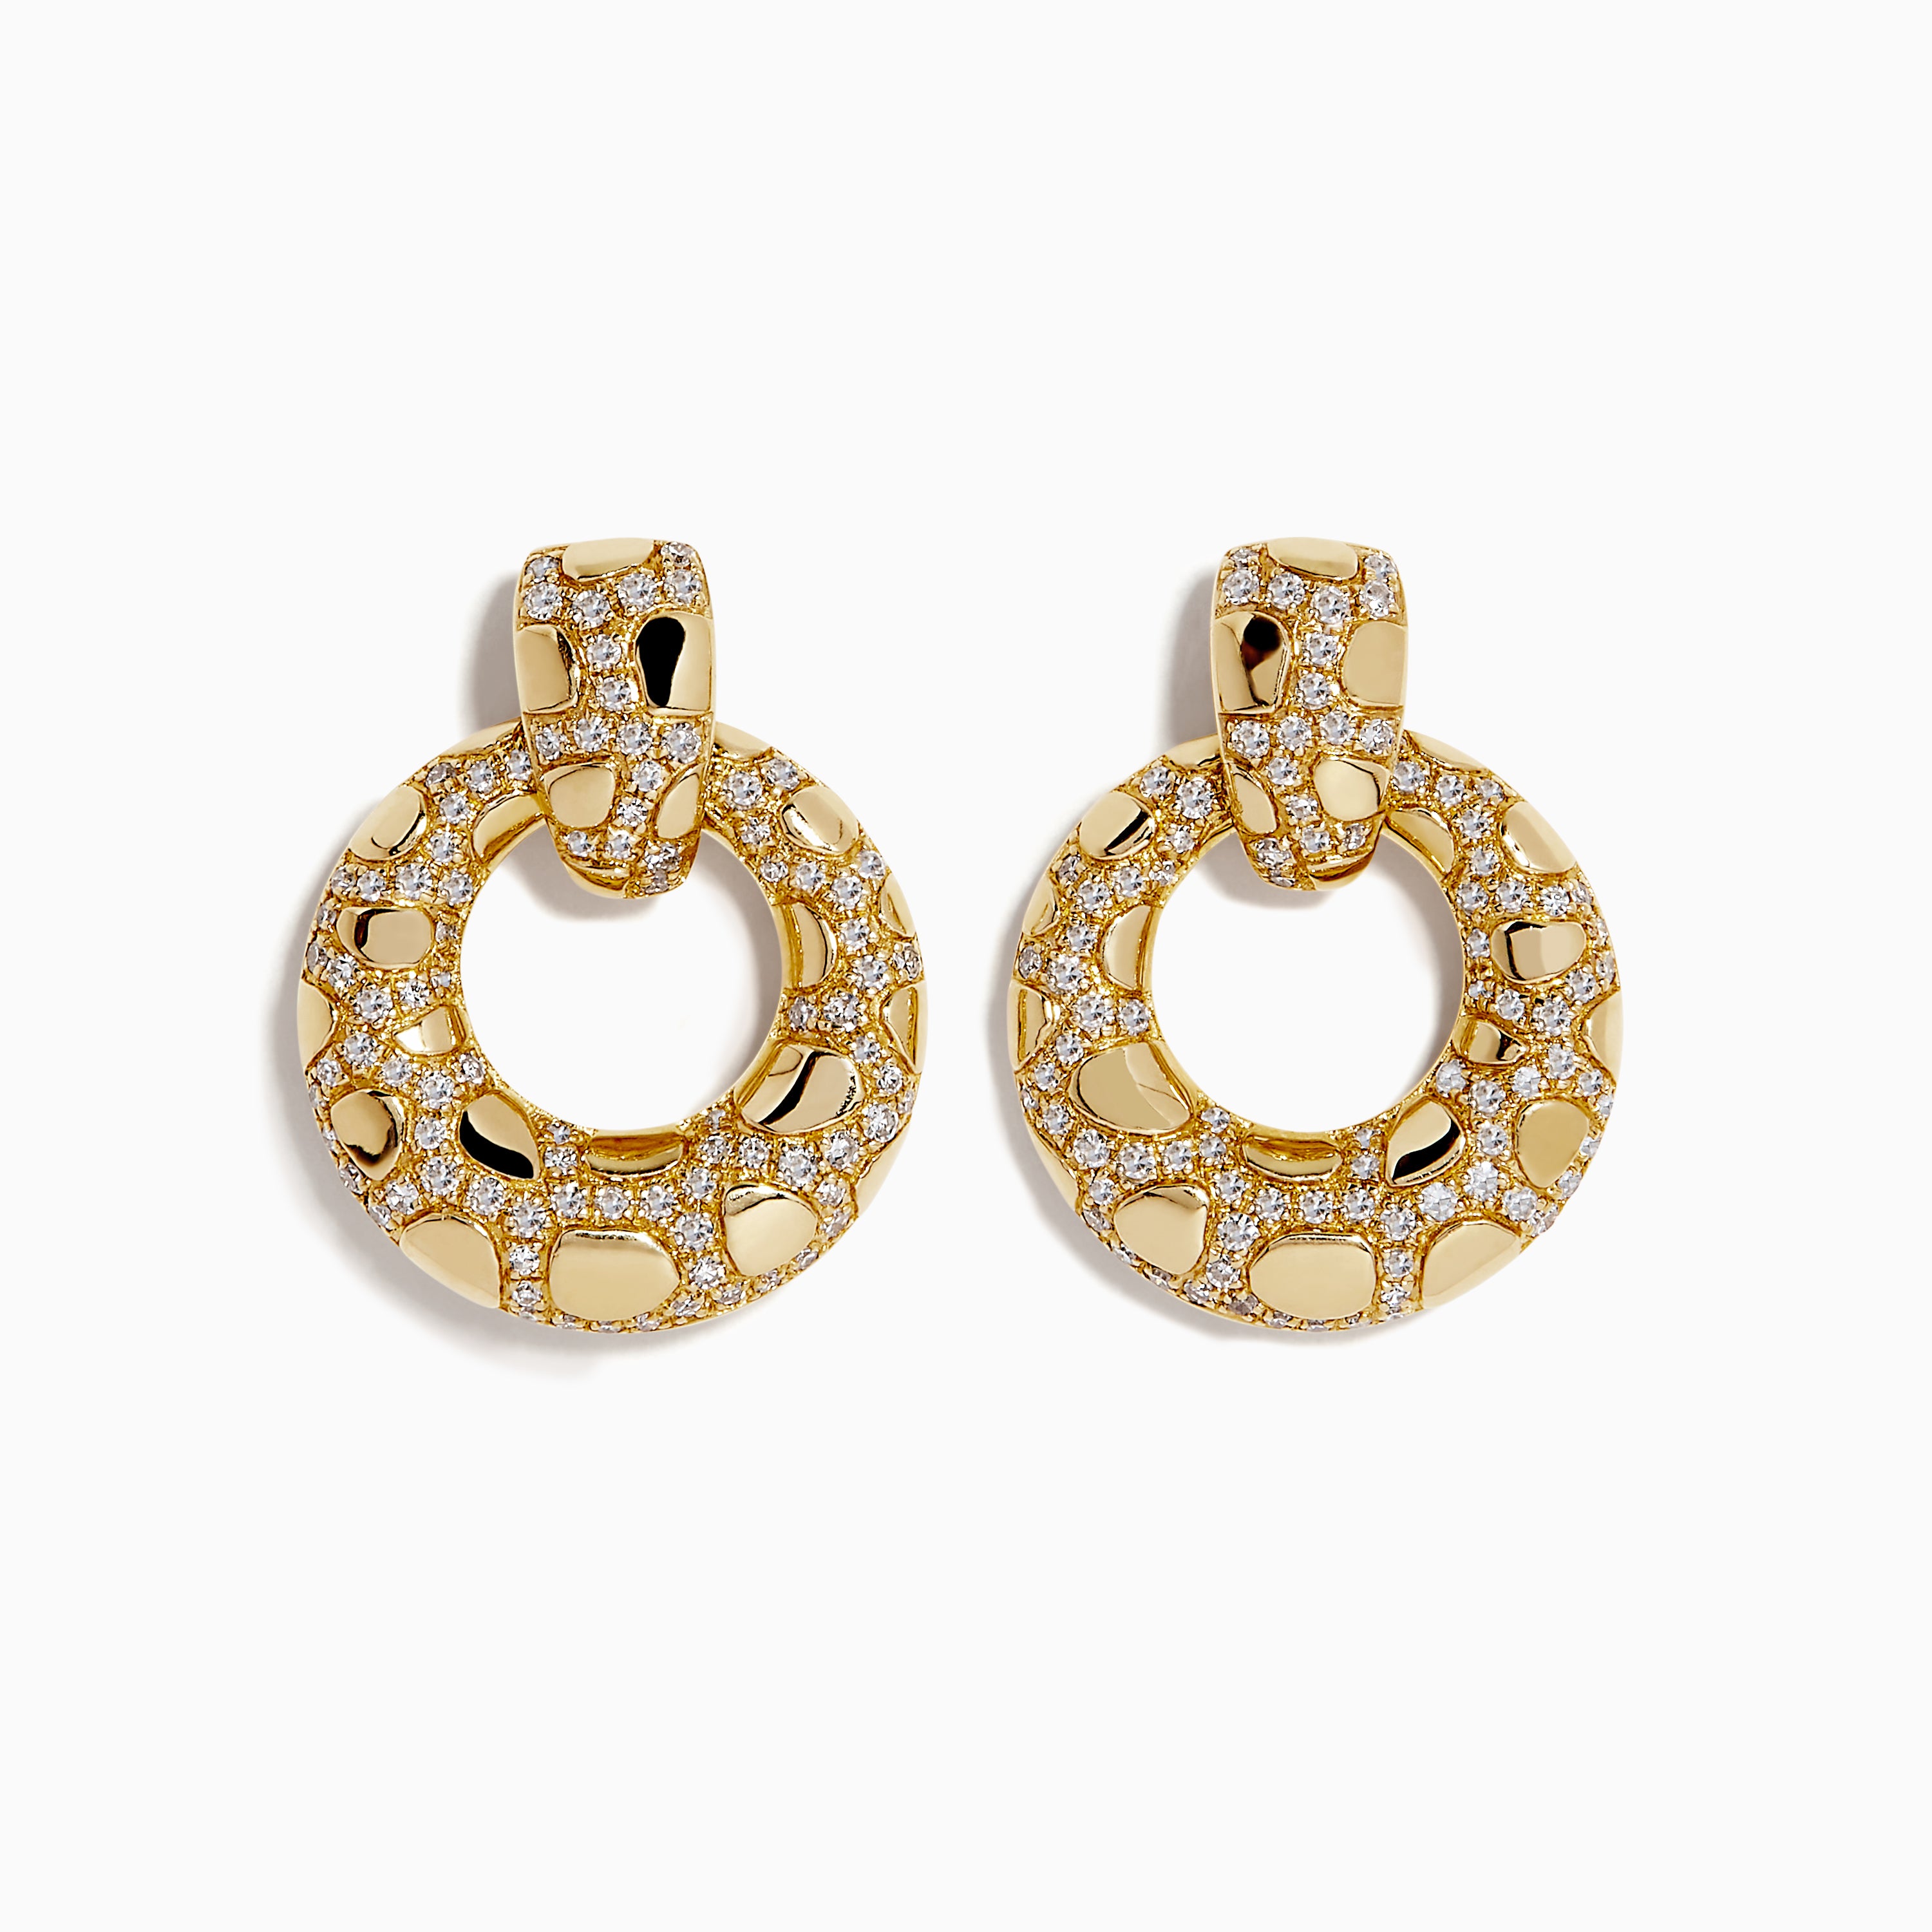 Effy D'Oro 14K Yellow Gold Diamond Pave Pebble Earrings, 0.73 TCW